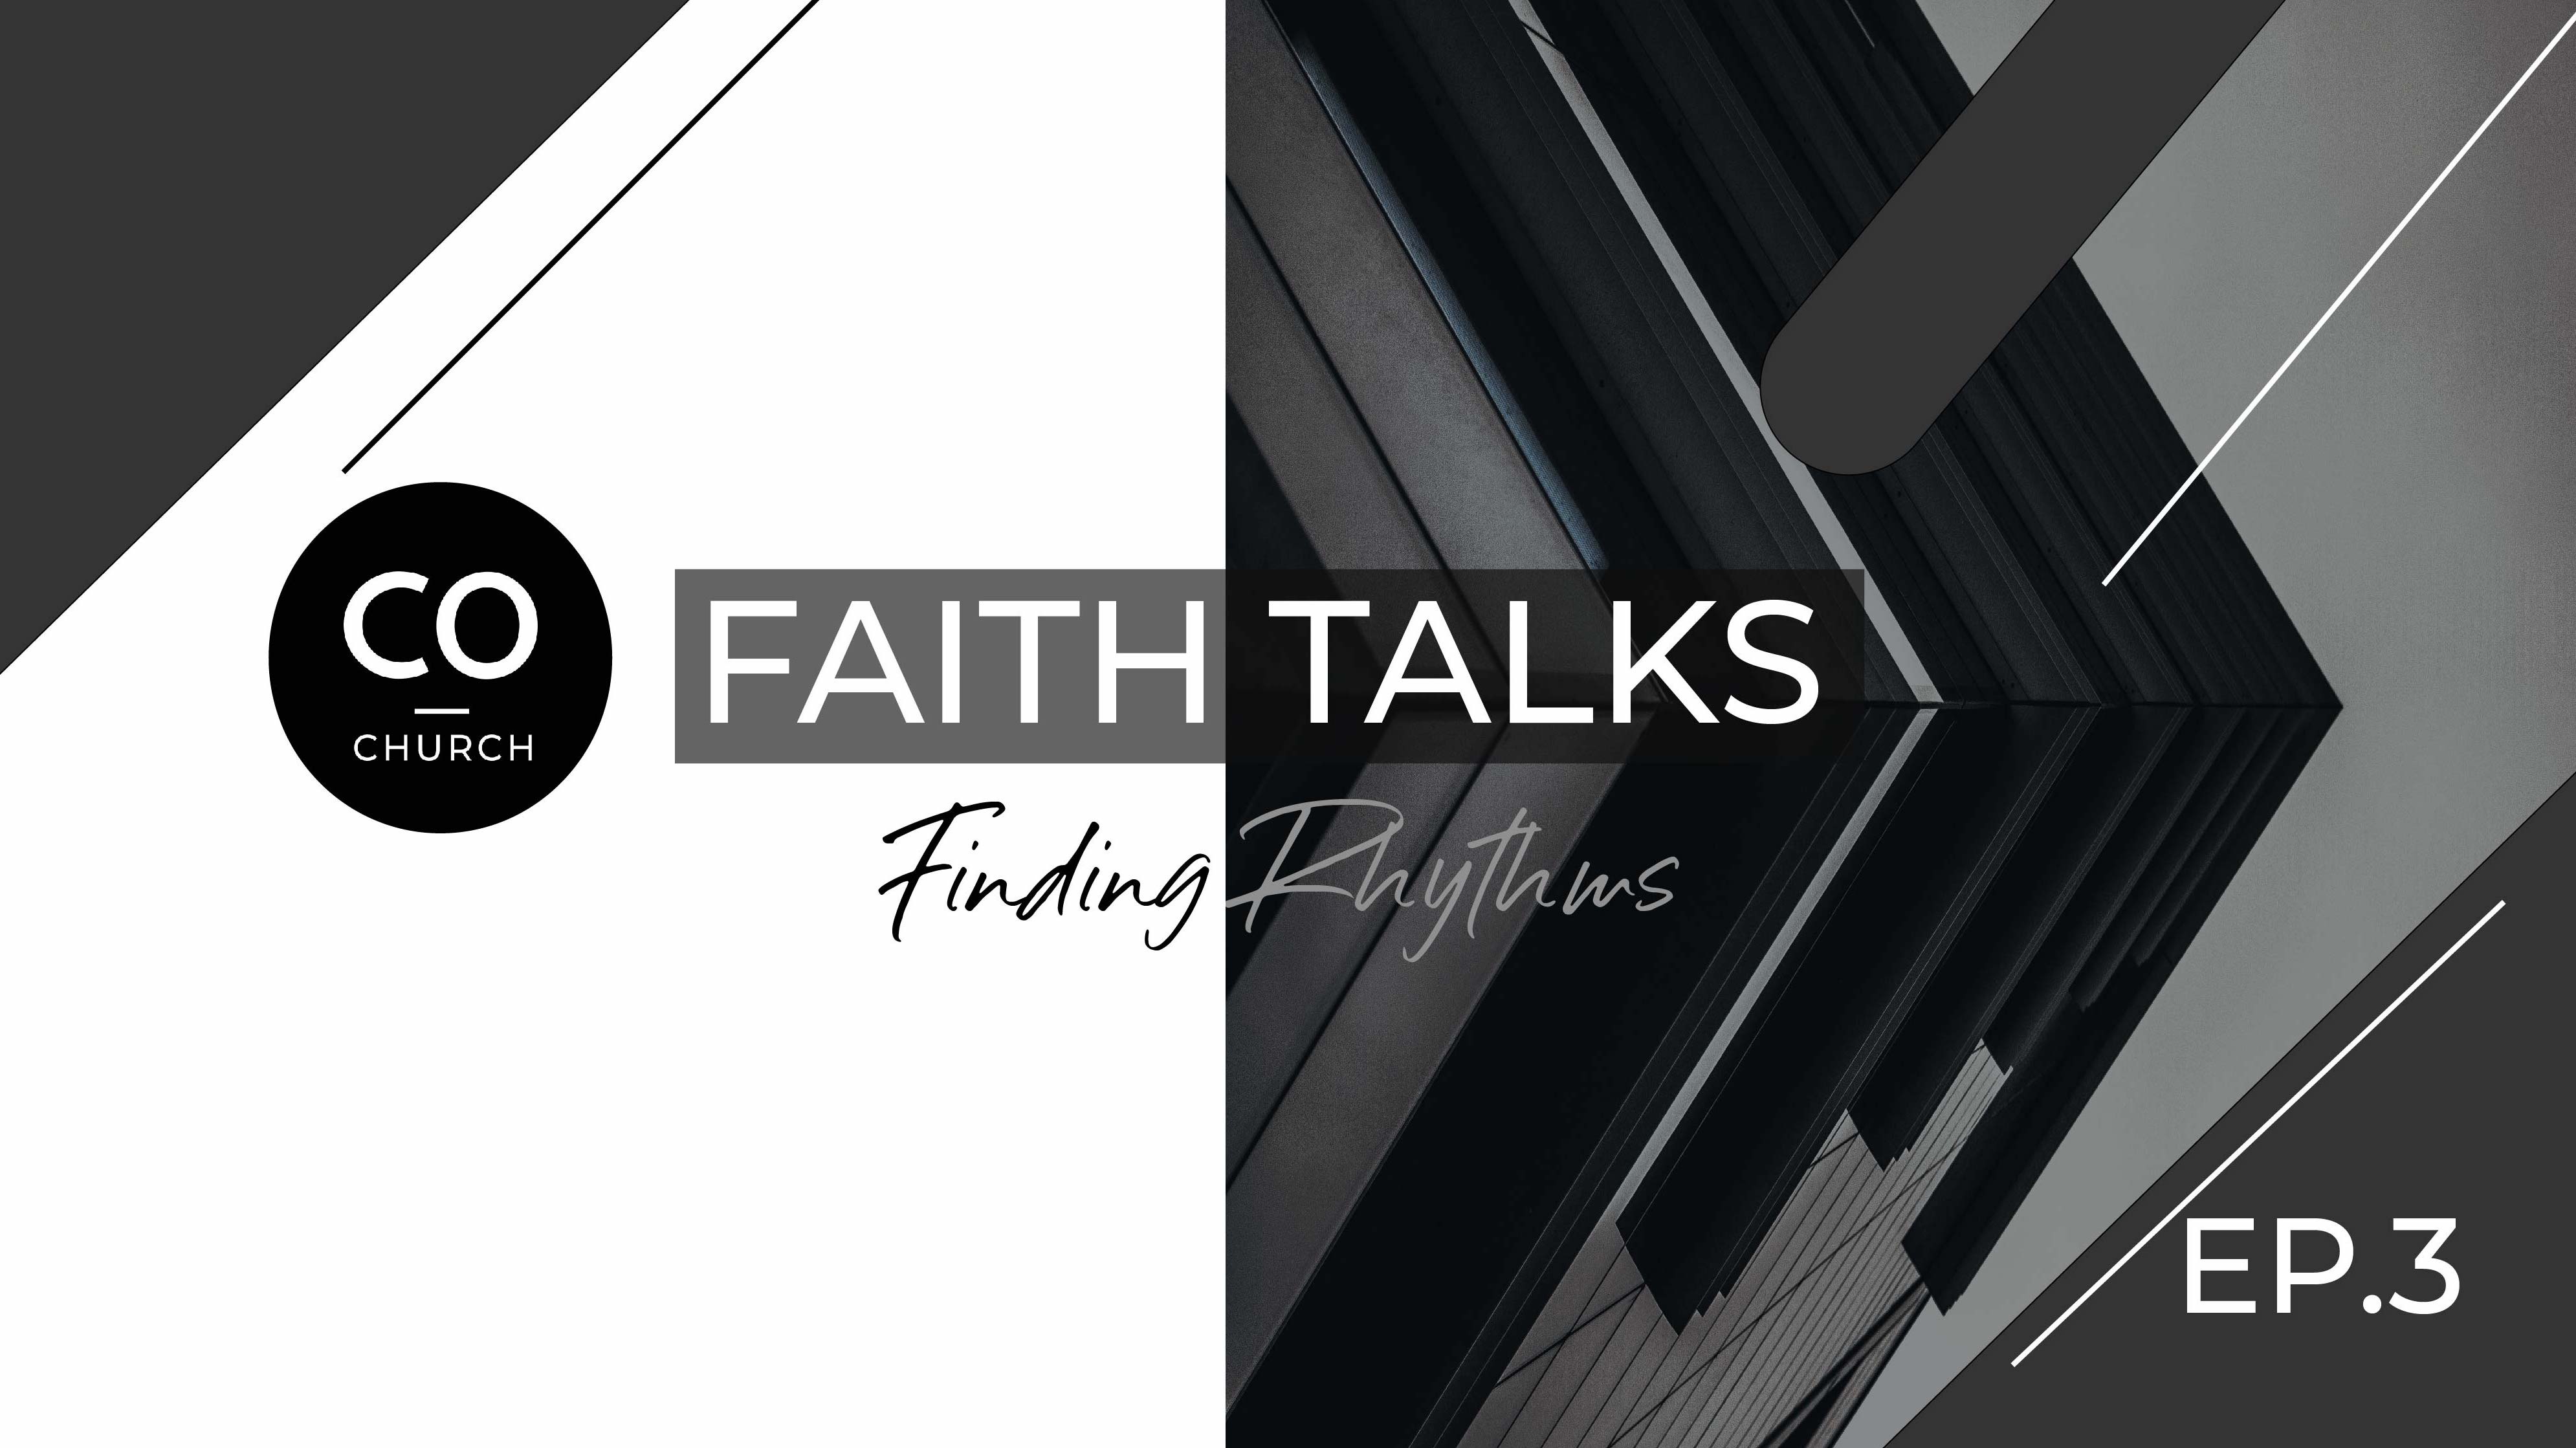 Faith Talk: Finding a Rhythm - Weekly rest